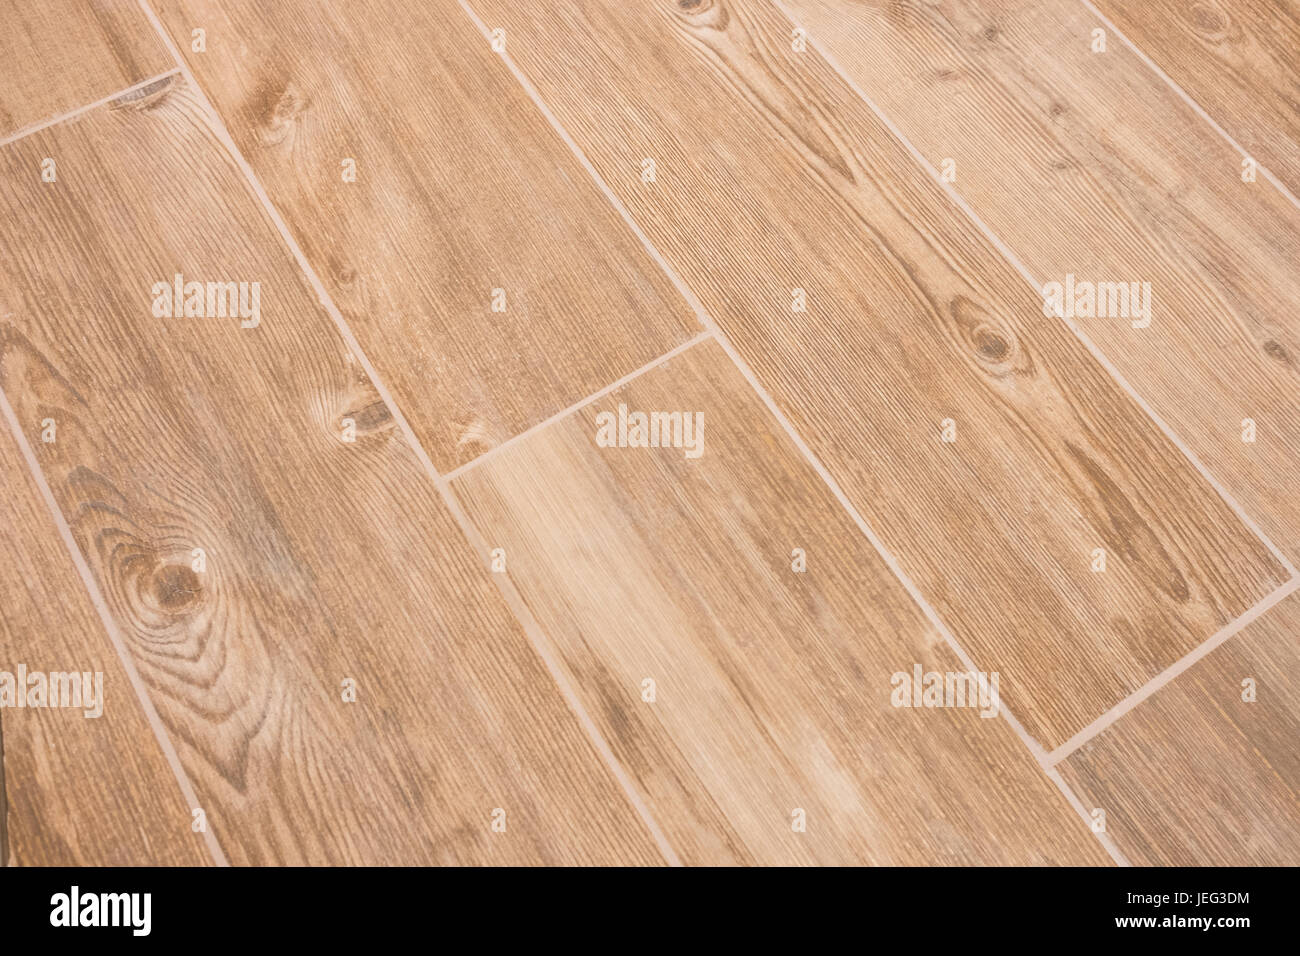 Wood Texture Tiled Floor Wooden Stoneware Stock Photo 146642096